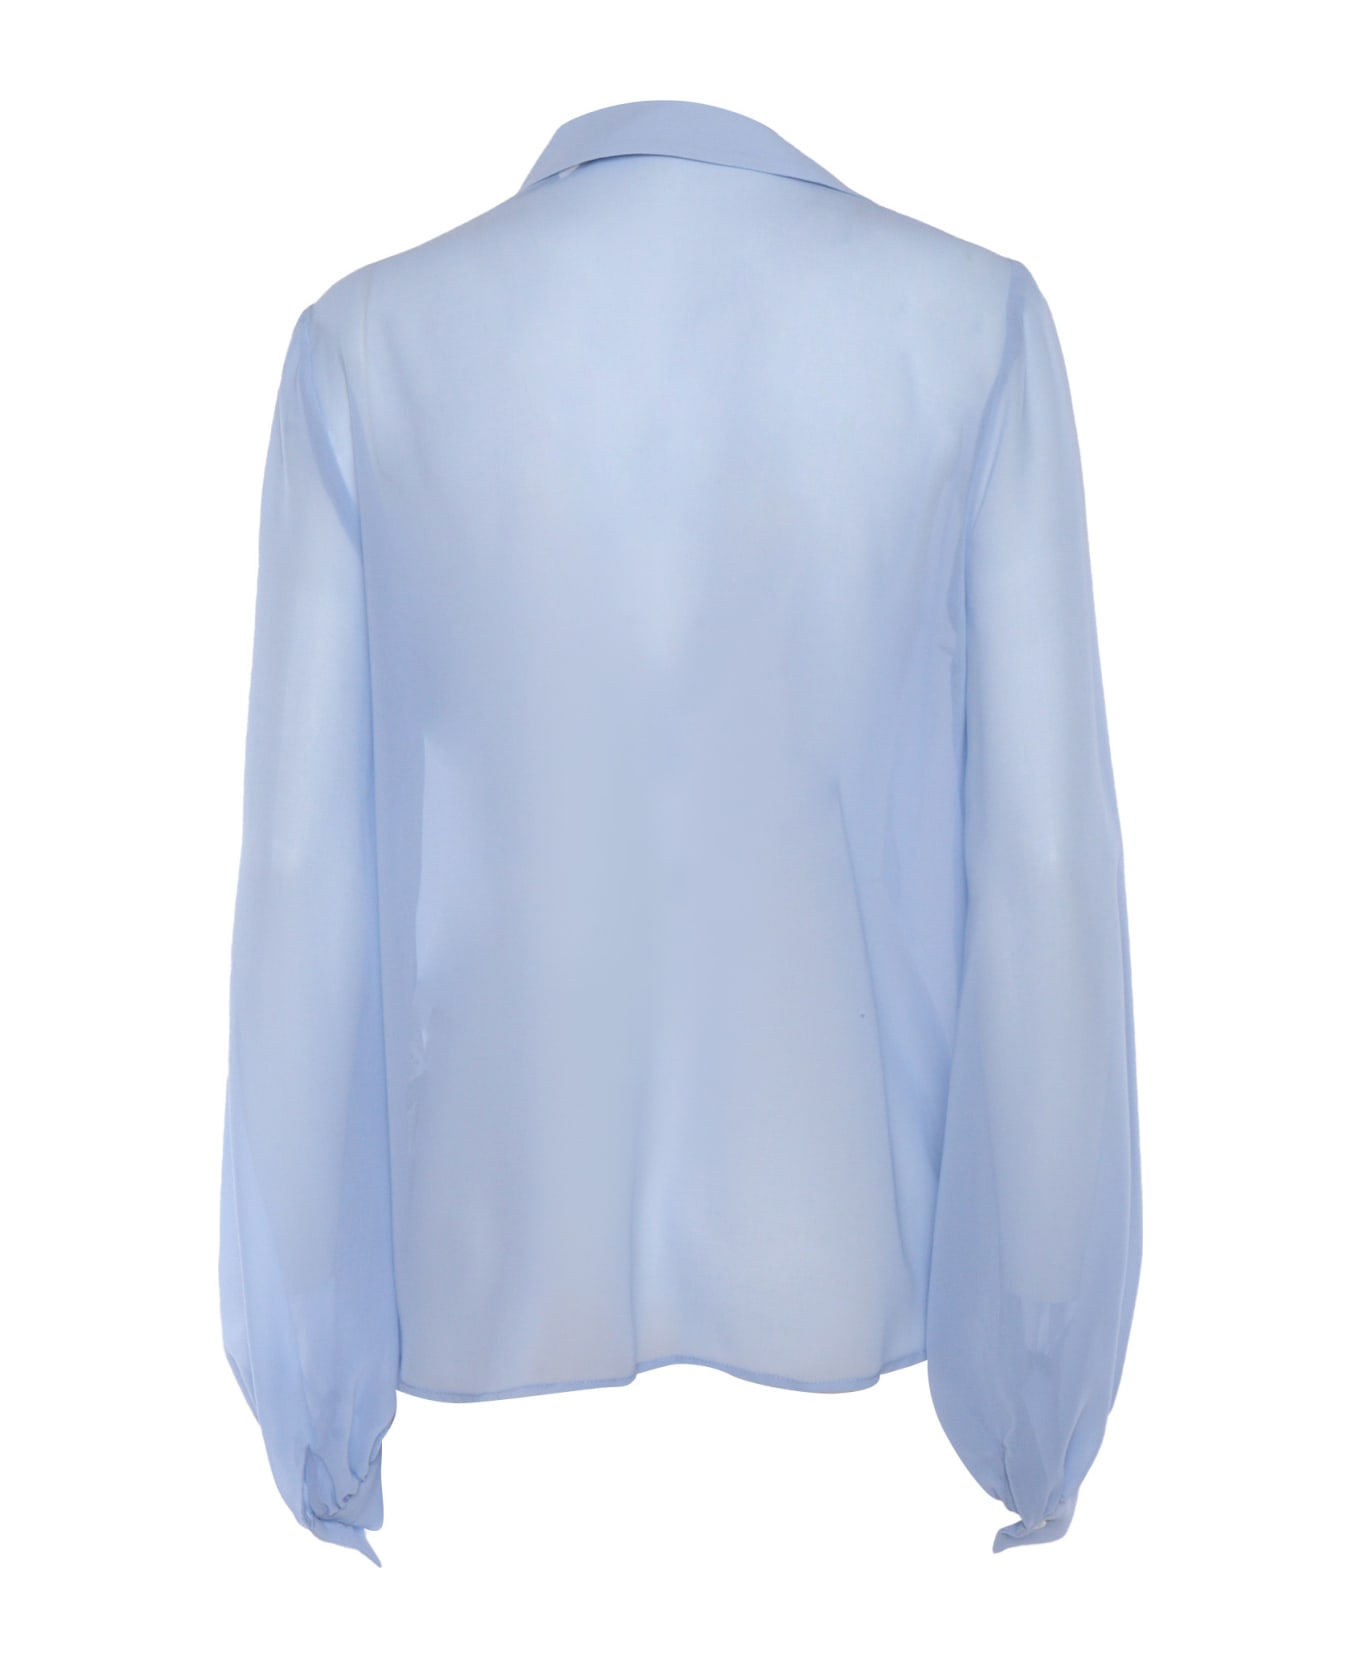 Parosh Light Blue Shirt With Lace - LIGHT BLUE